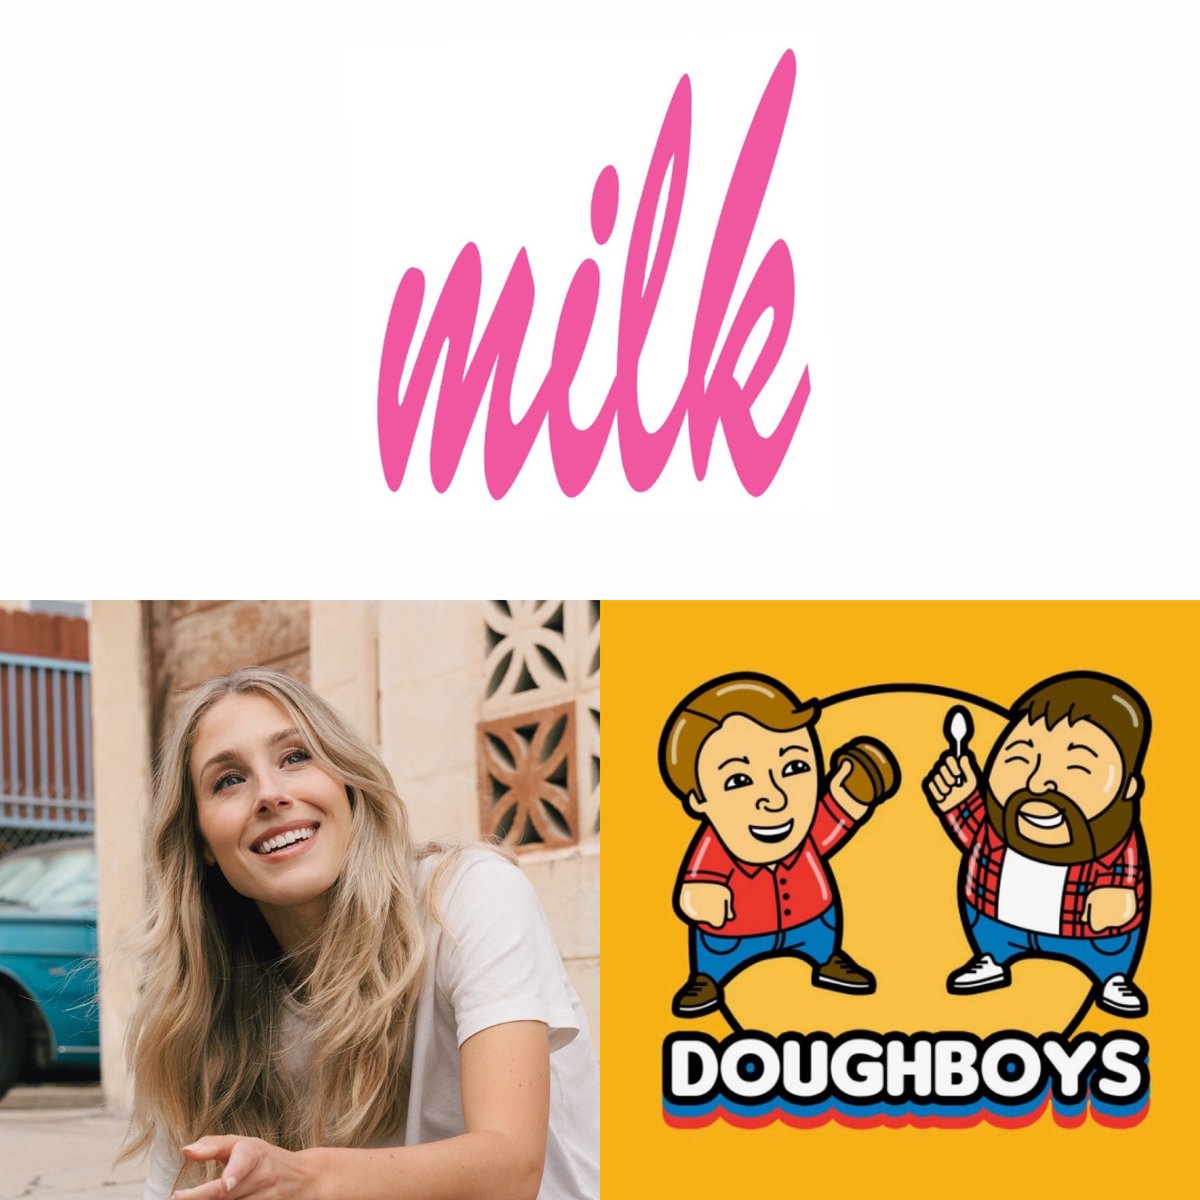 Milk Bar (bakery) - Wikipedia